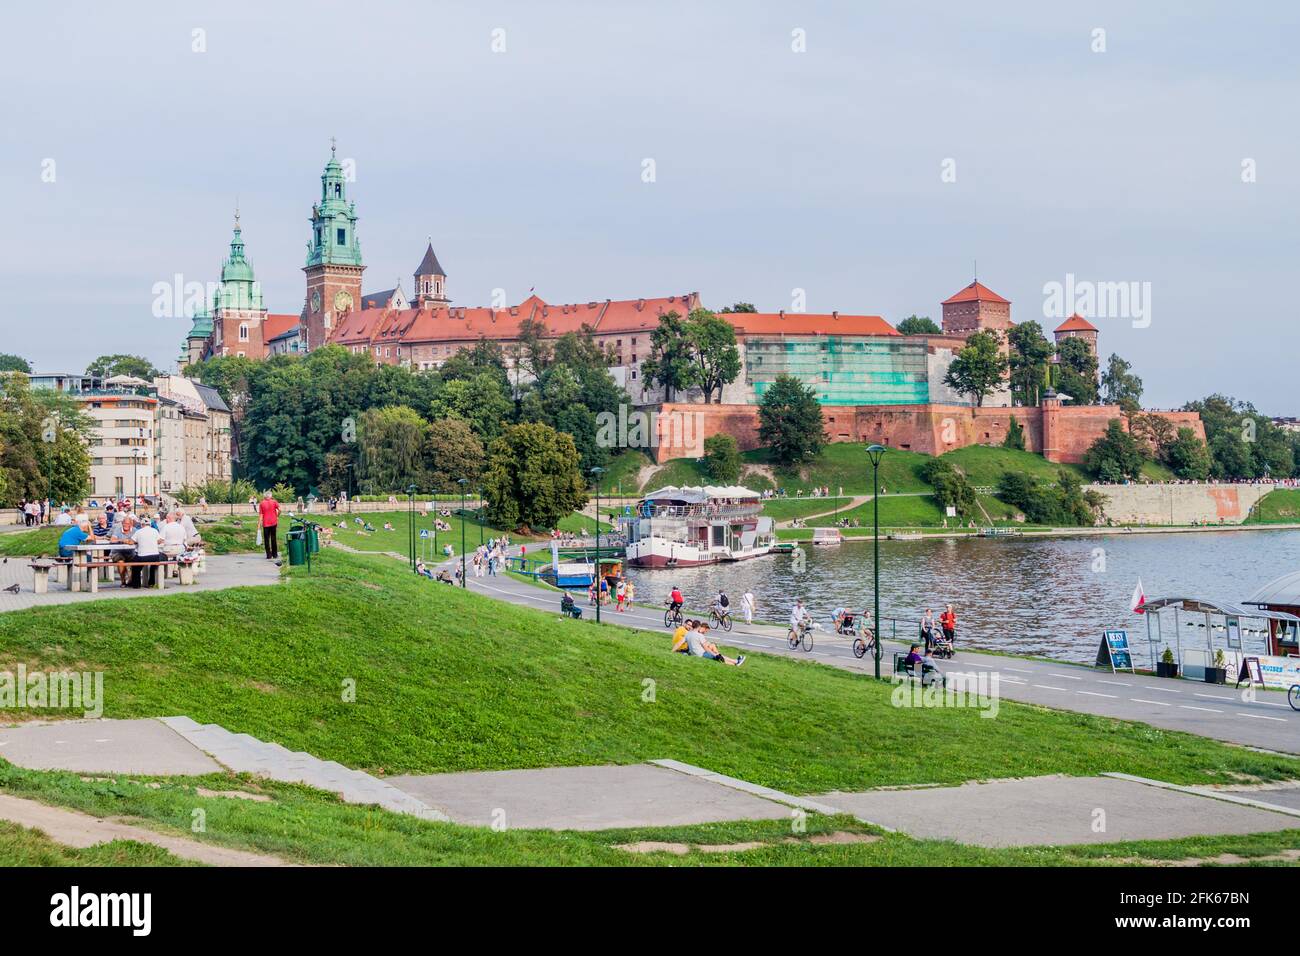 KRAKOW, POLAND - SEPTEMBER 4, 2016: People walk along Vistula river, in front of Wawel castle in Krakow, Poland Stock Photo